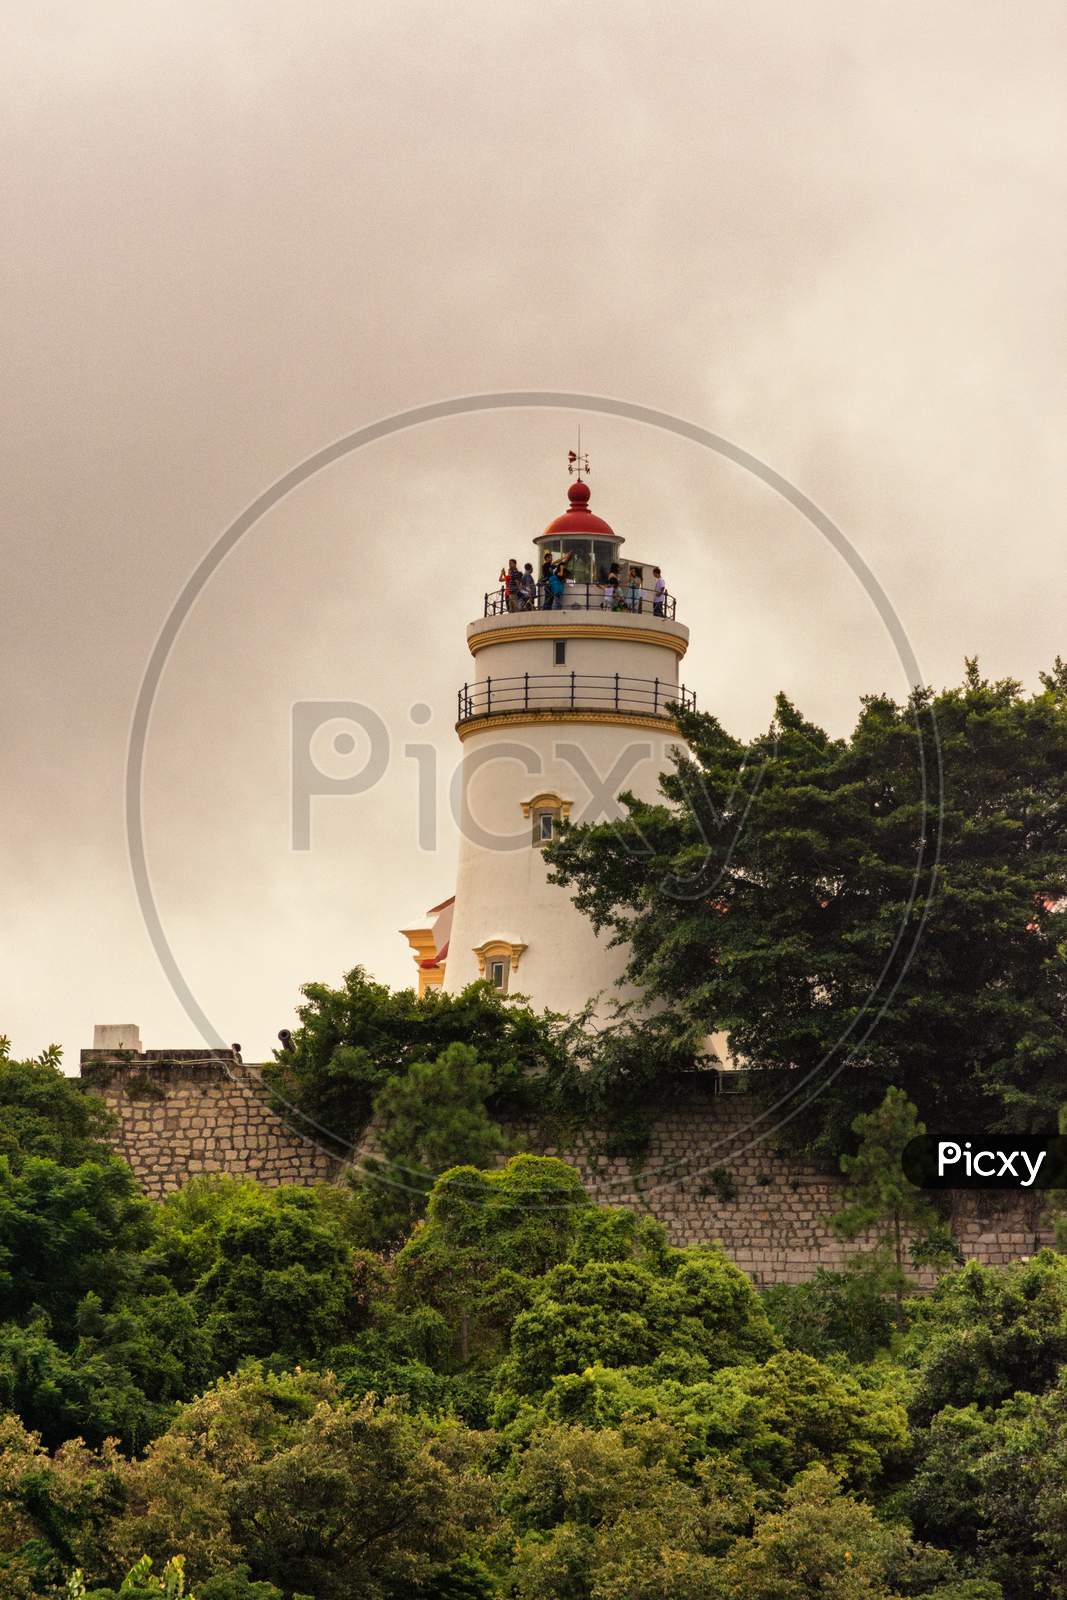 Guia Fortress Lighthouse In Macau, China